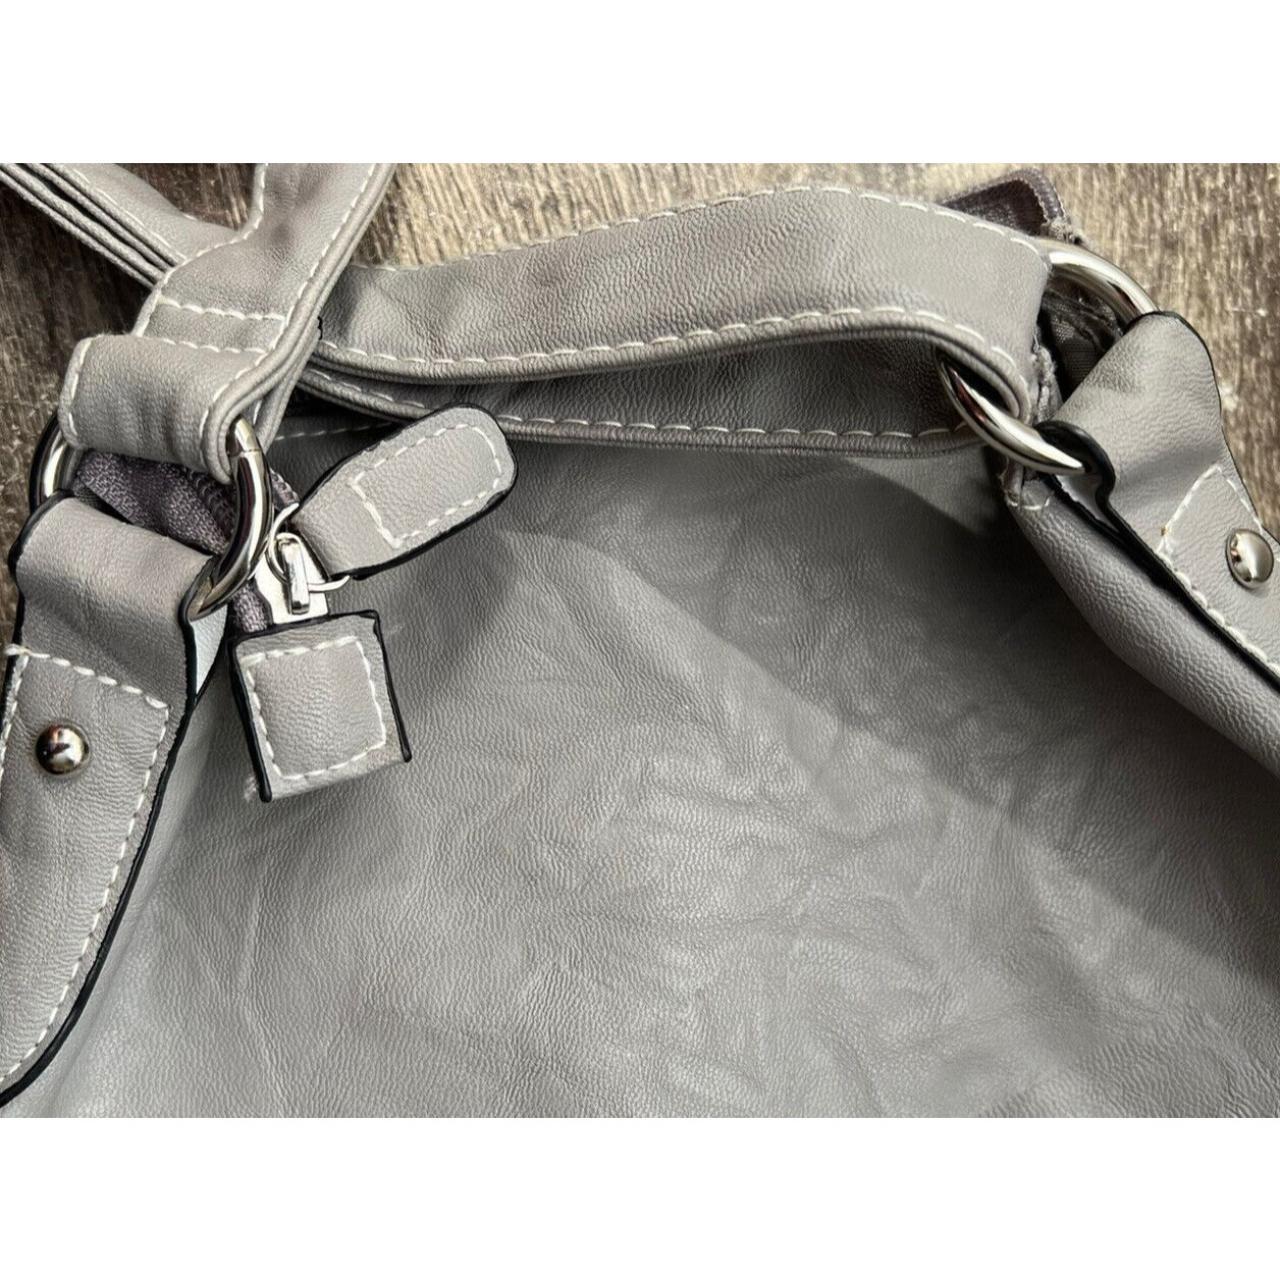 Rosetti Handbags : Bags & Accessories - Walmart.com